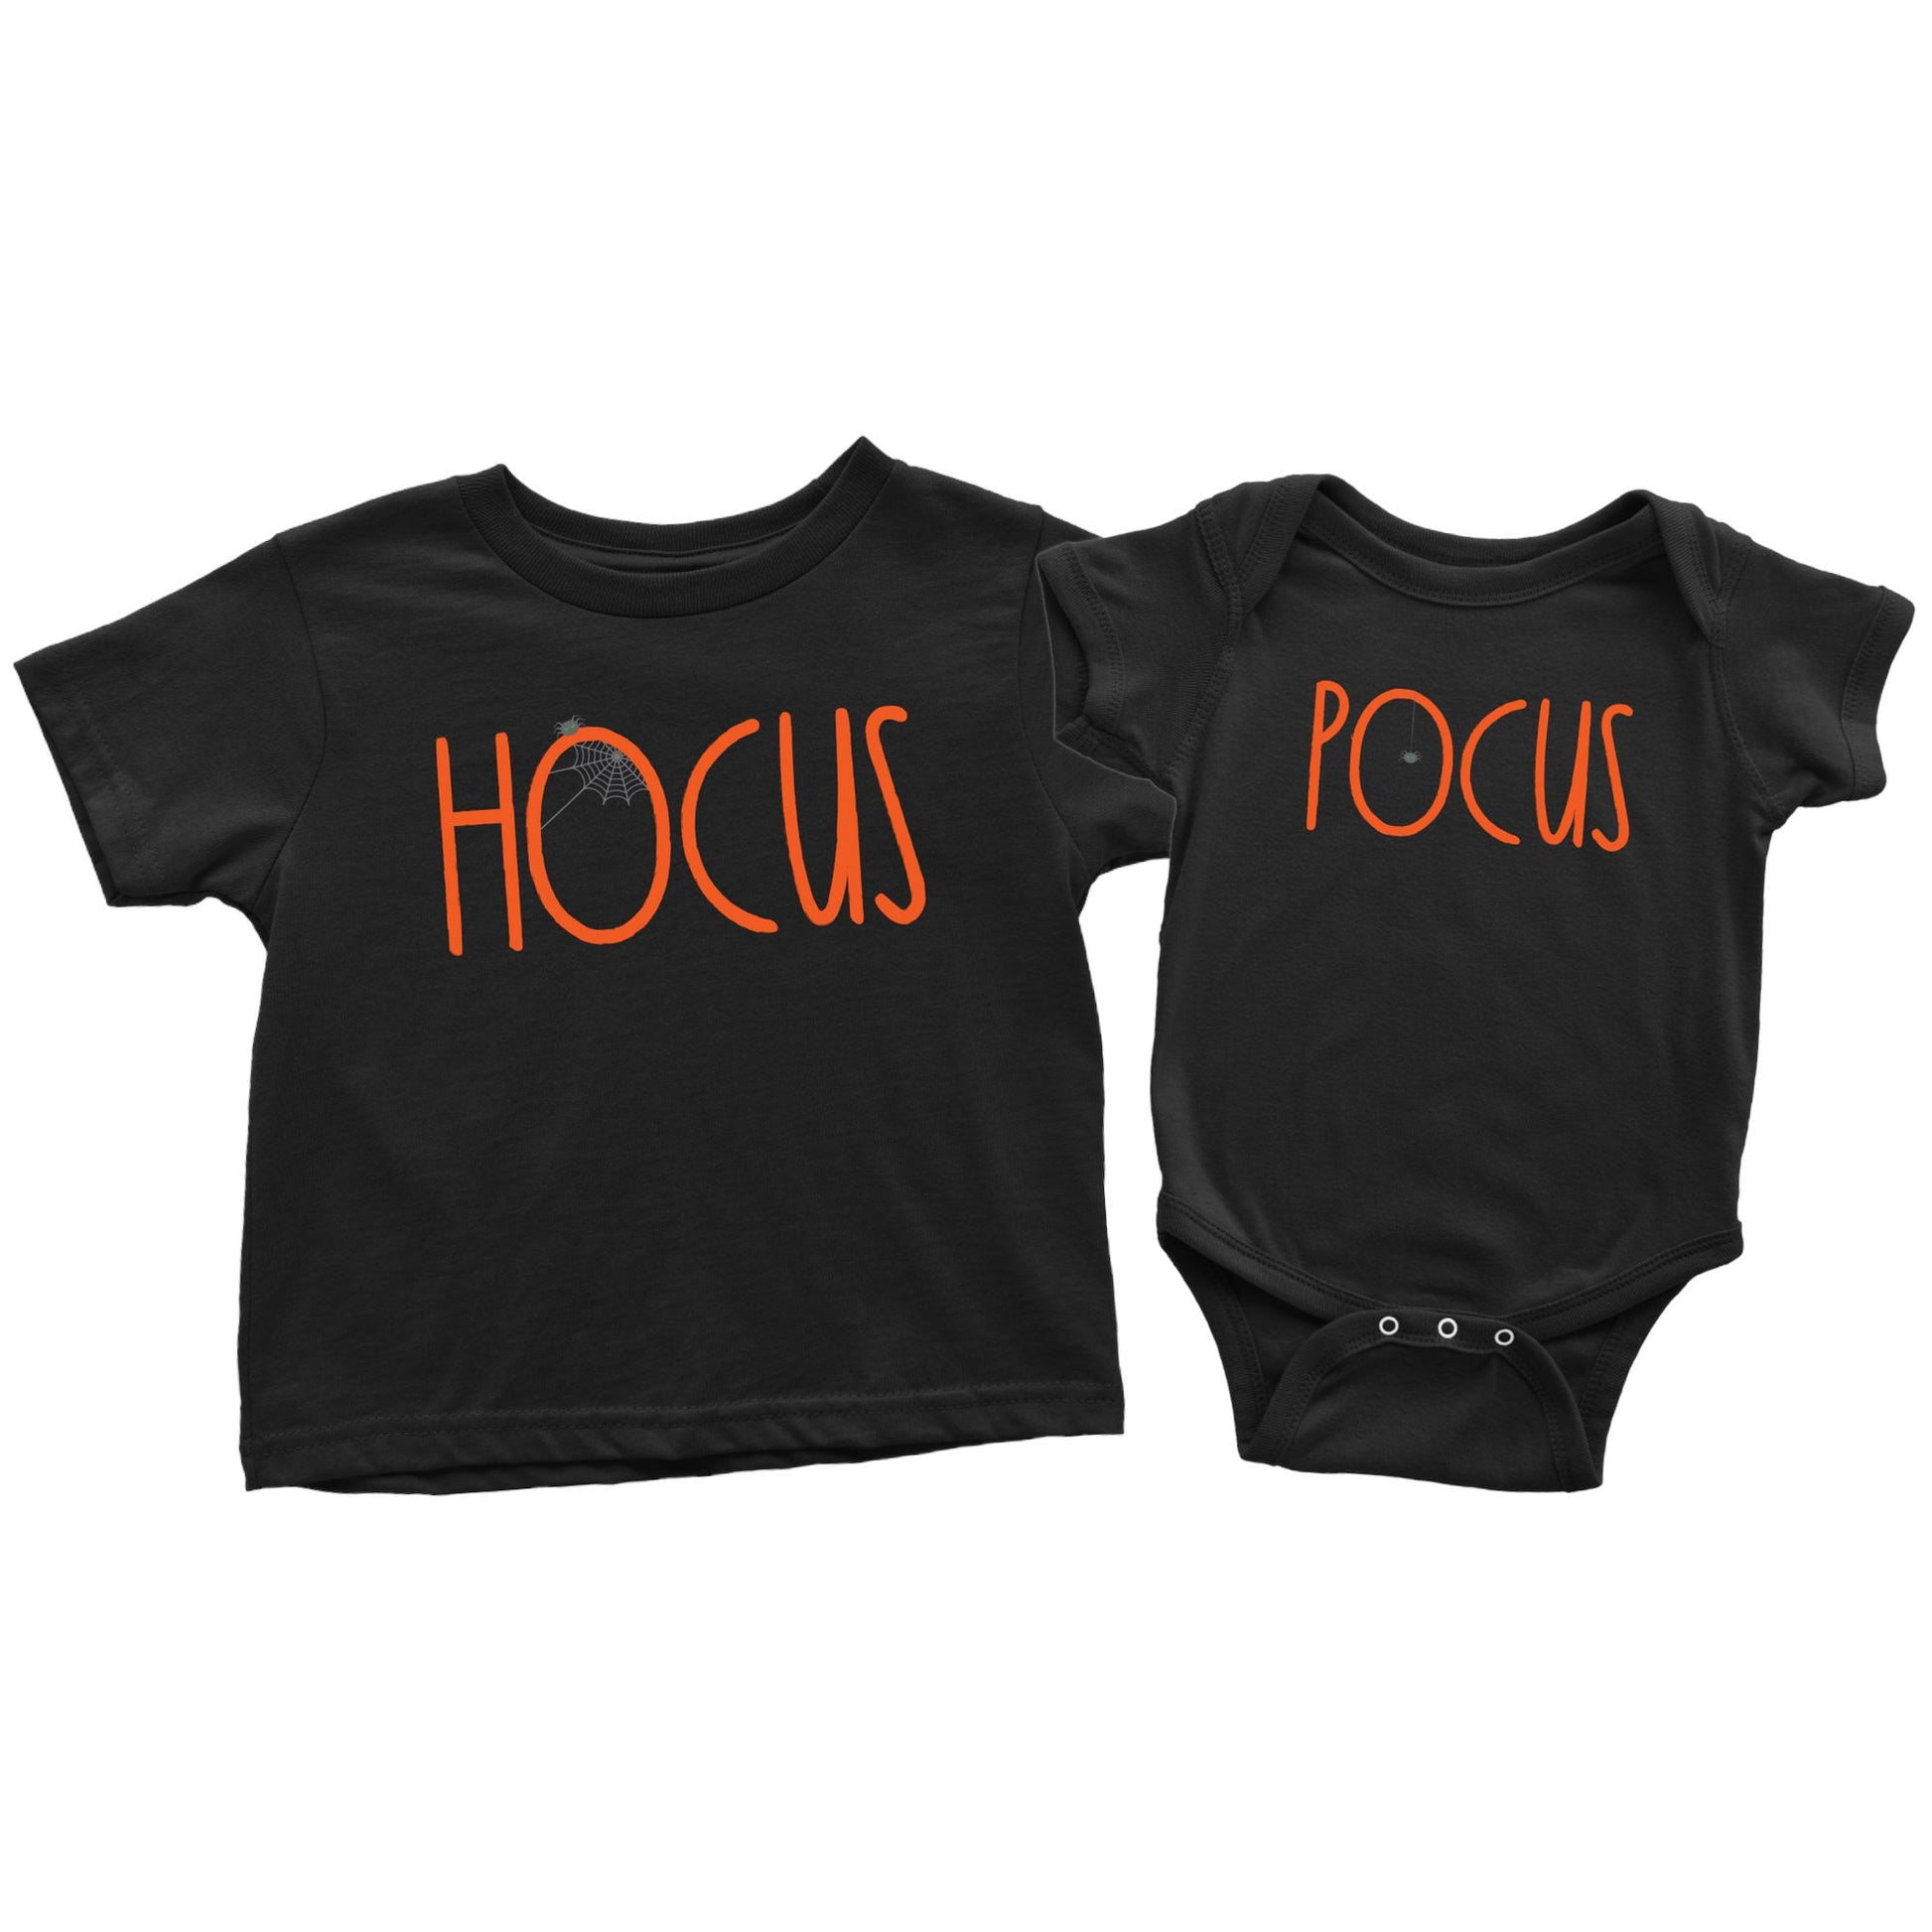 Hocus Pocus Sibling Shirts